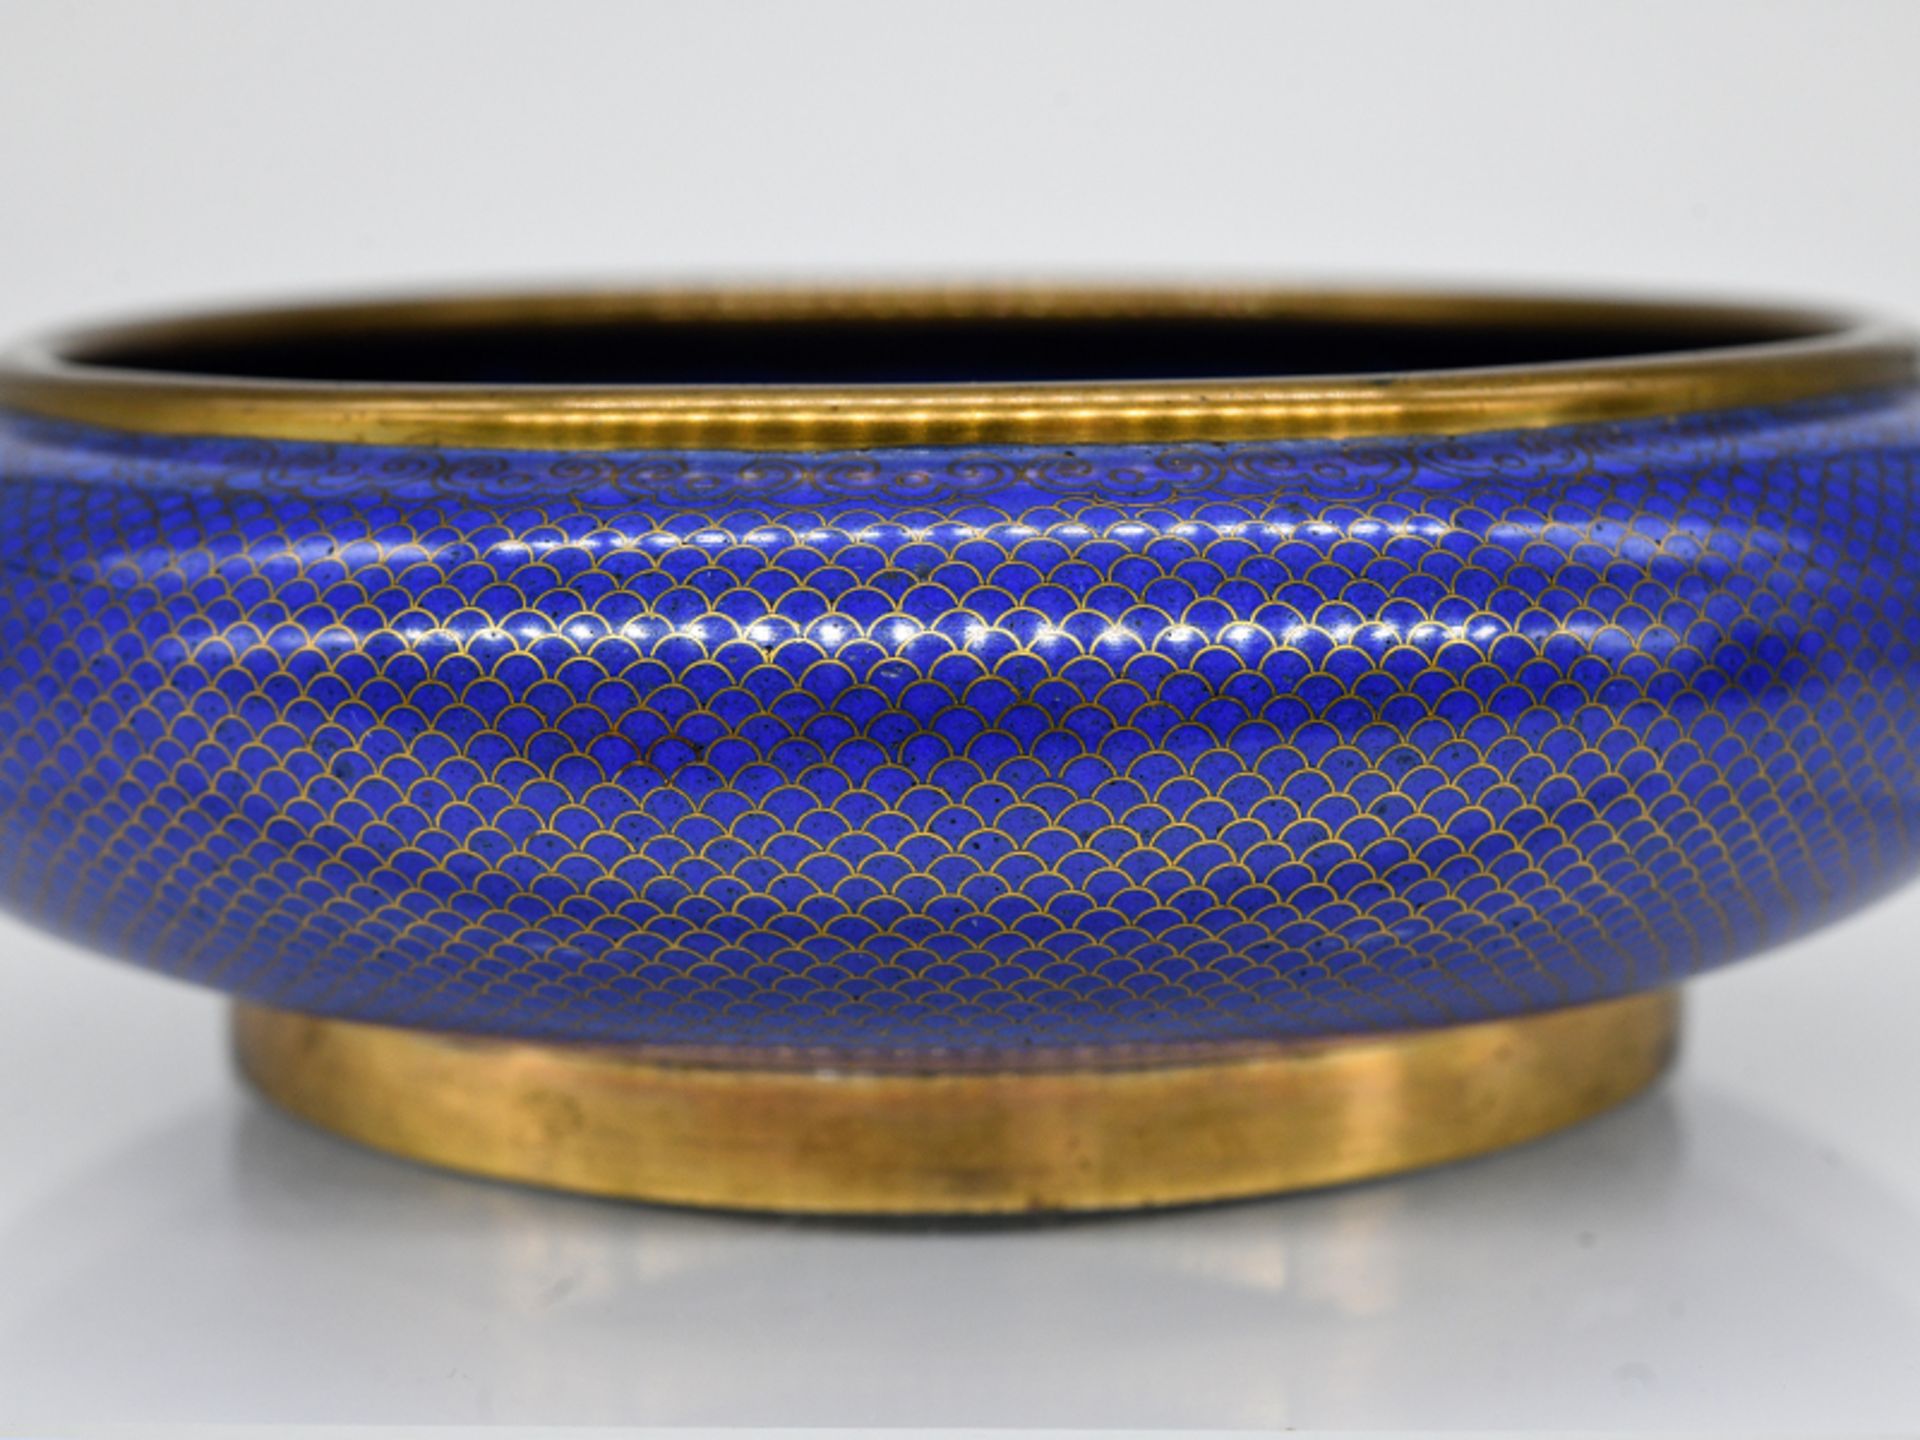 Cloisonné-Schale; China; 19. Jh.Kupfer/Messing mit blau-goldfarbigem Emaille-Cloisonné-Dekor; - Image 3 of 7